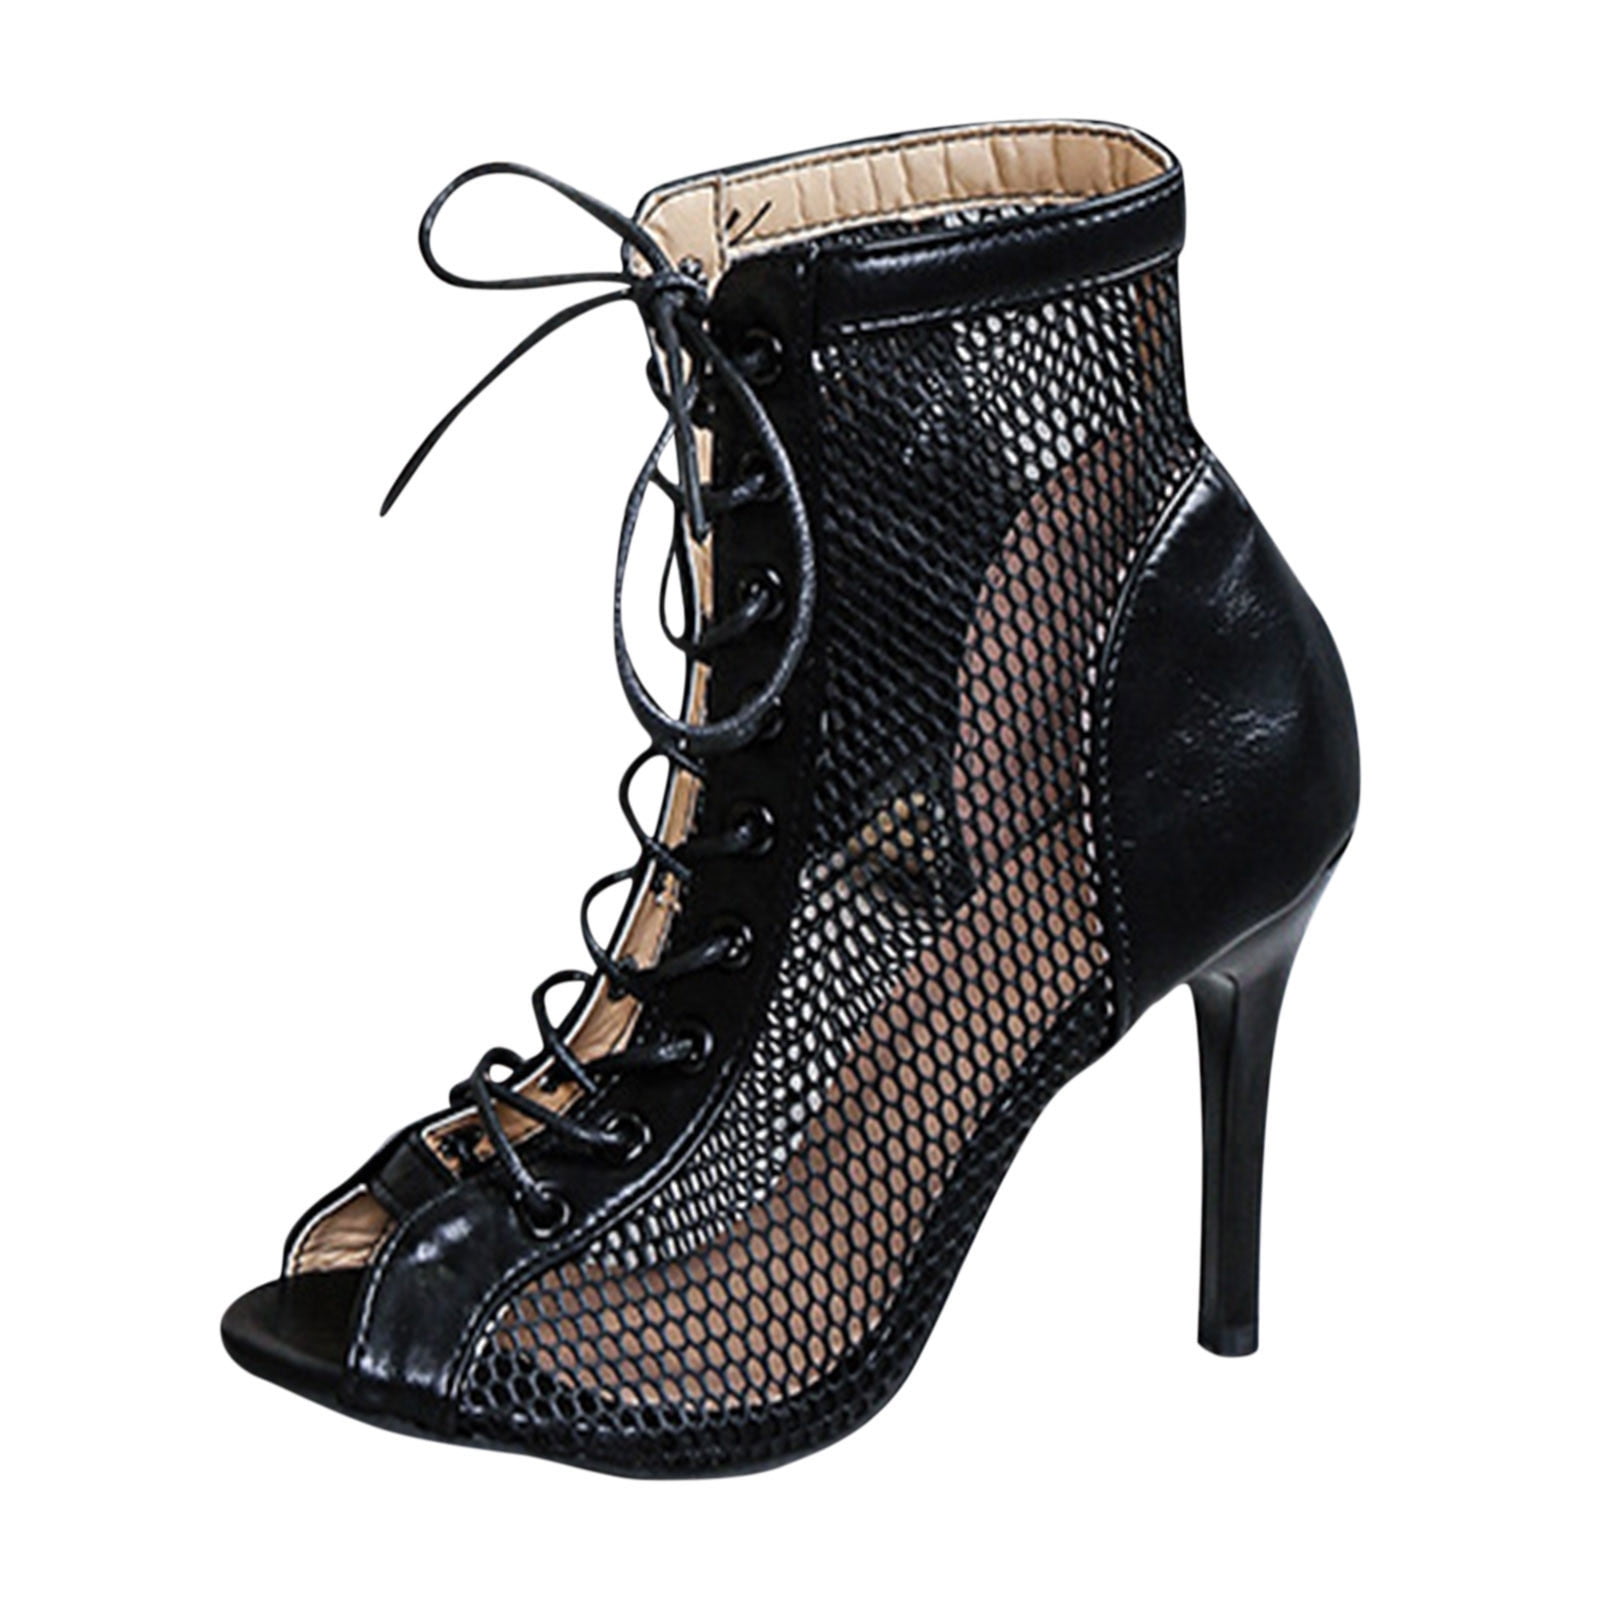 Women's Shoe Boot | Next Official Site